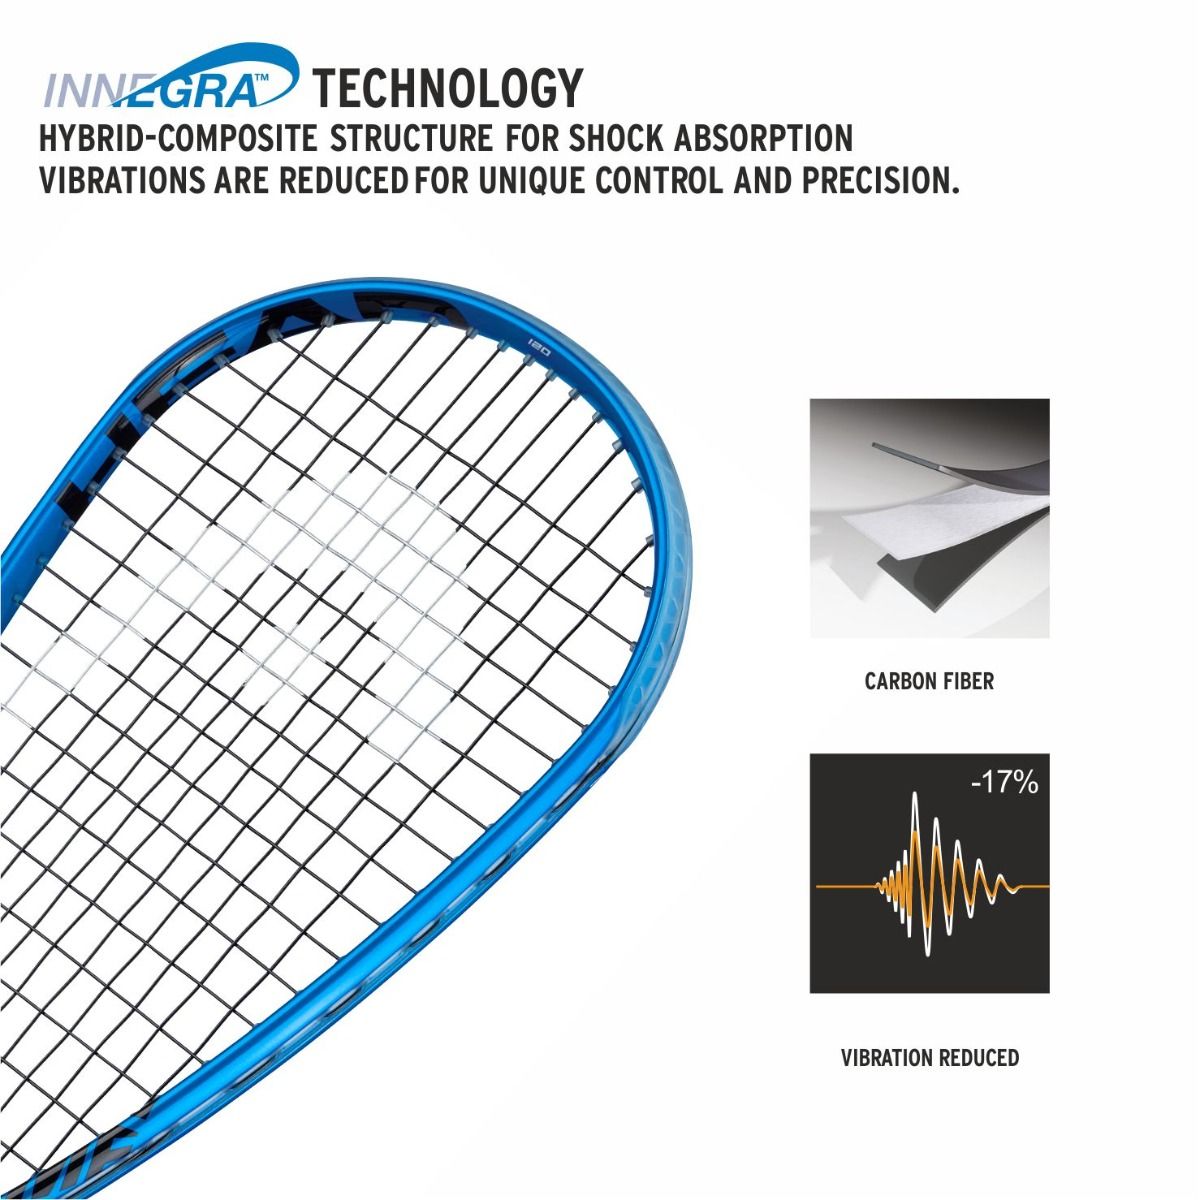 Head Extreme 120 Squash Racquet-Squash Rackets-Pro Sports